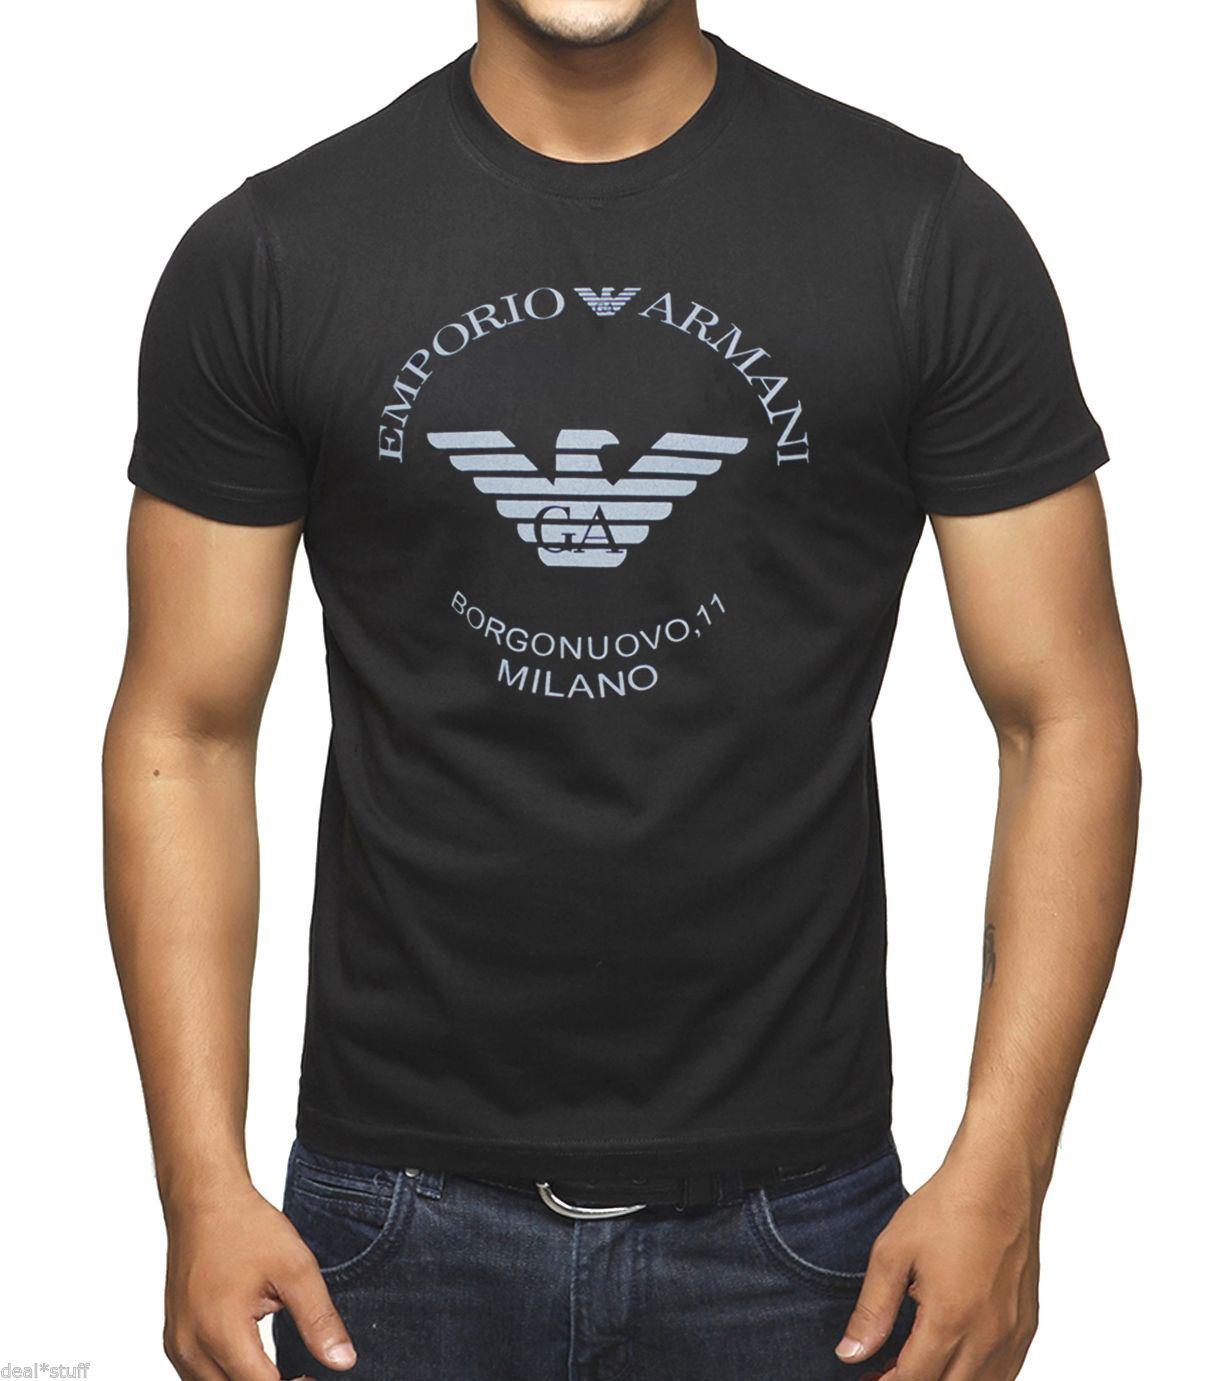 BNWT Emporio Armani Borgonuovo,11 stylish t-shirt available in M,L and XL size 